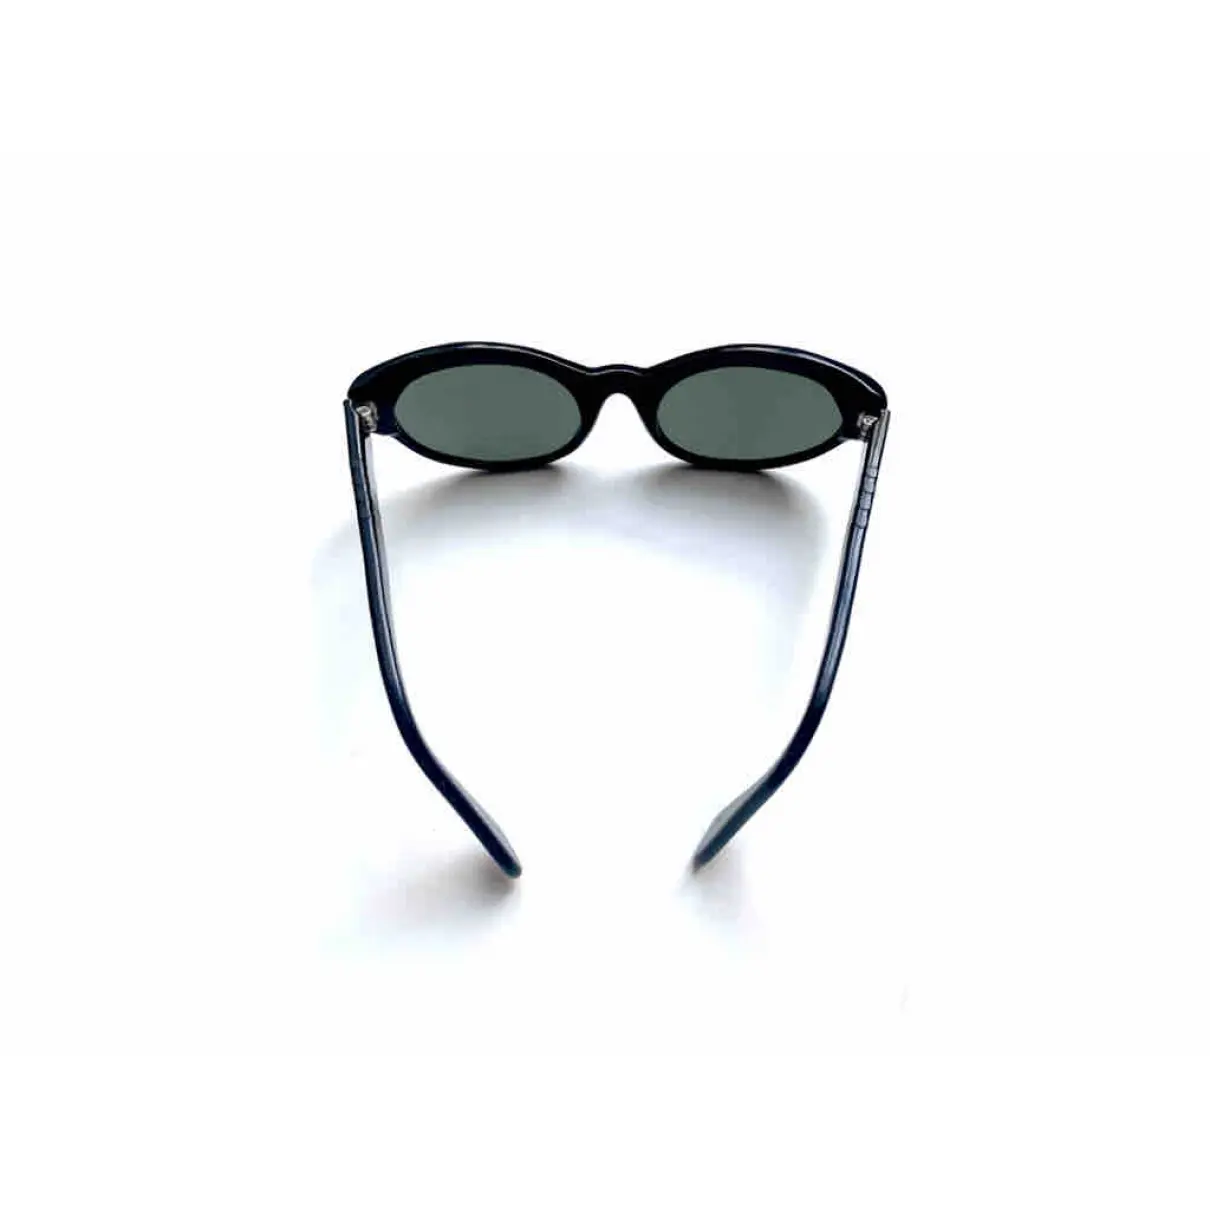 Buy Persol Sunglasses online - Vintage